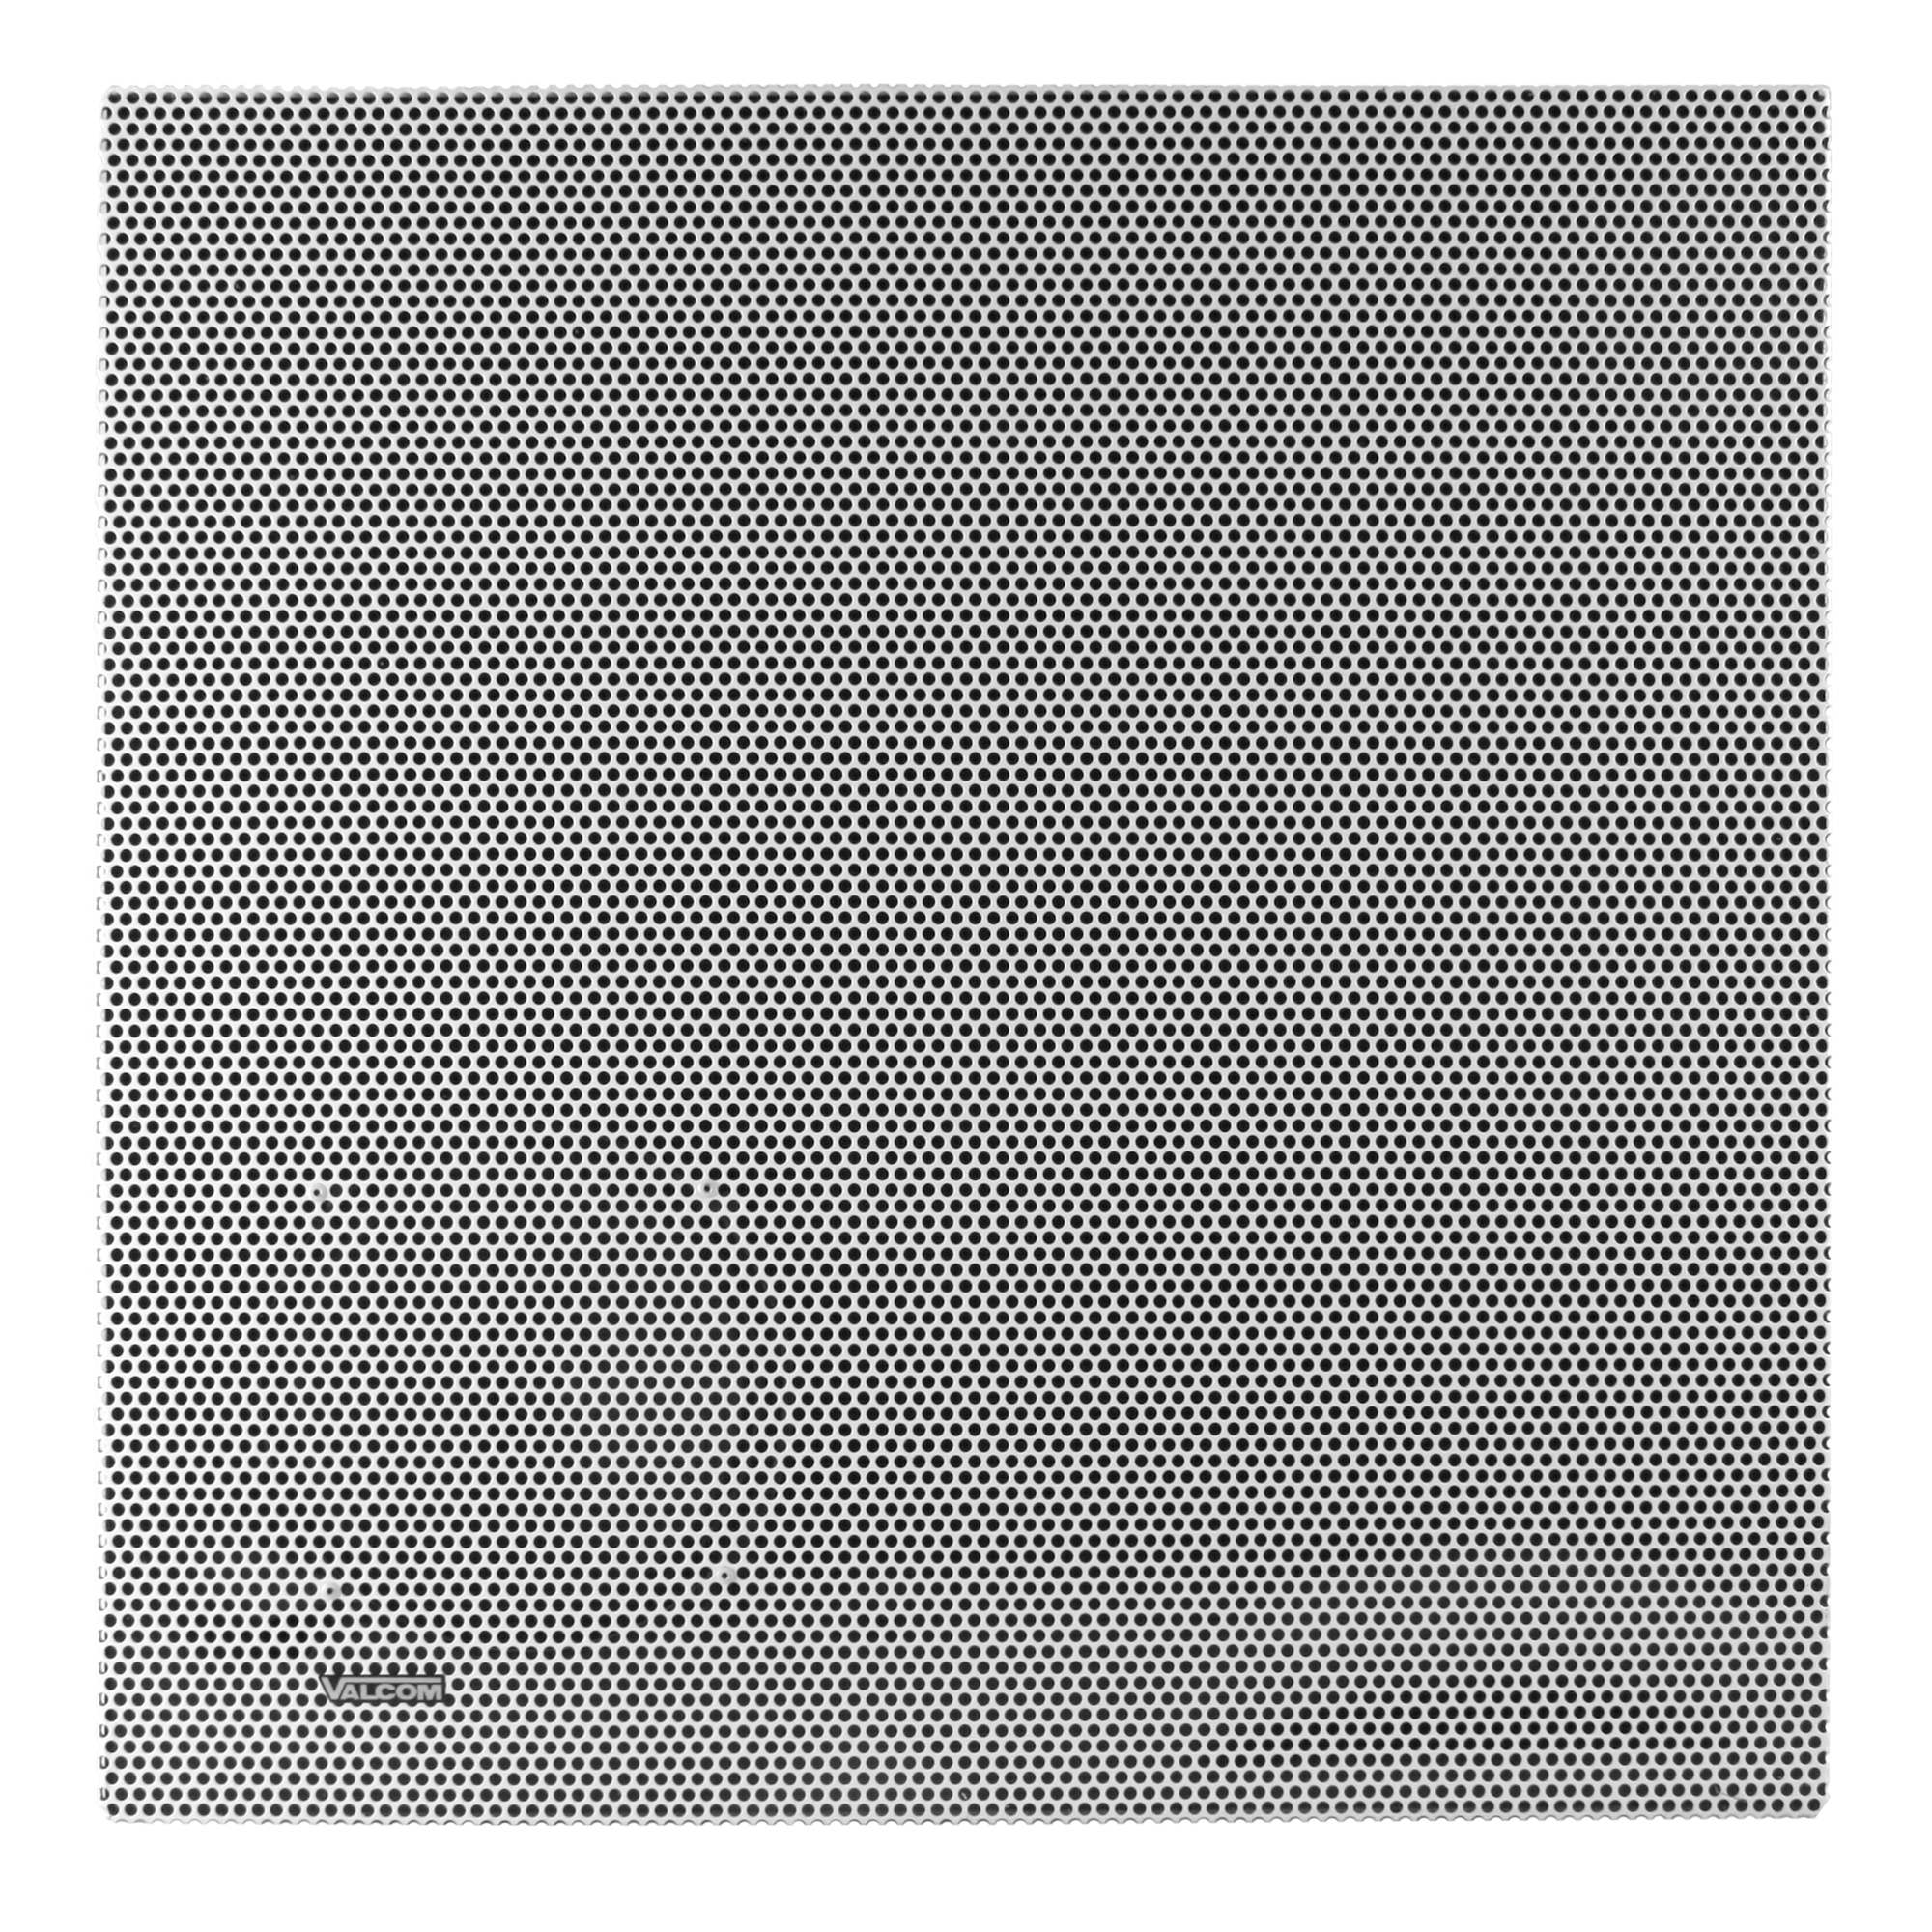 V-CTLA-2 Lay-In 2′ x 2′ Ceiling Speaker with Backbox, Talkback, White, 2 Pack